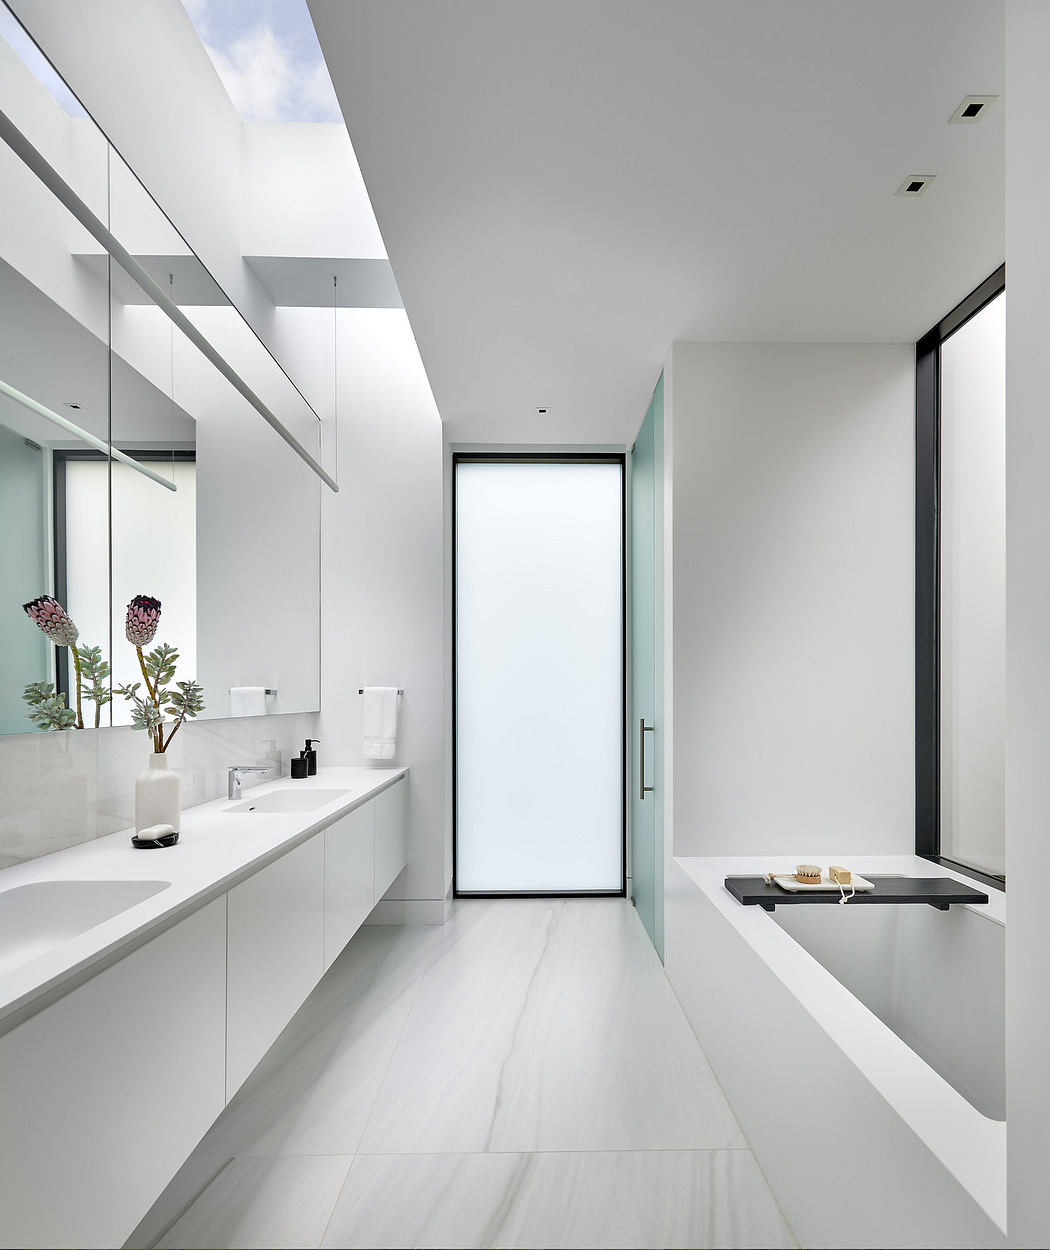 Modern bathroom with white minimalist design and sleek fixtures.